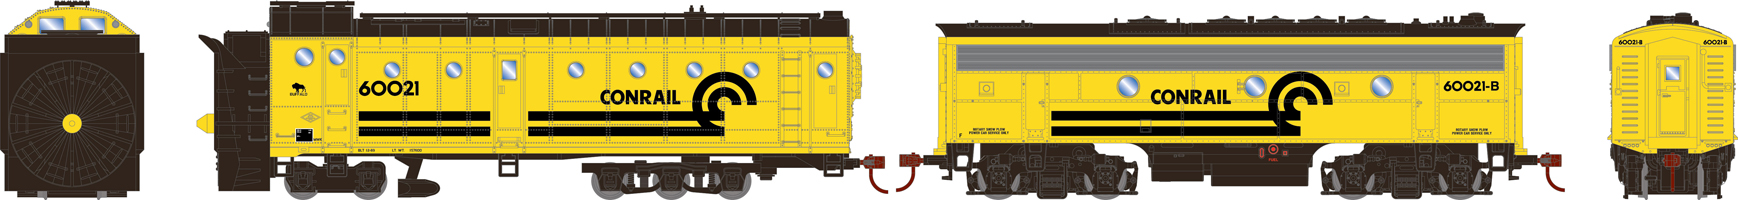 Model of yellow snowplow and B-unit